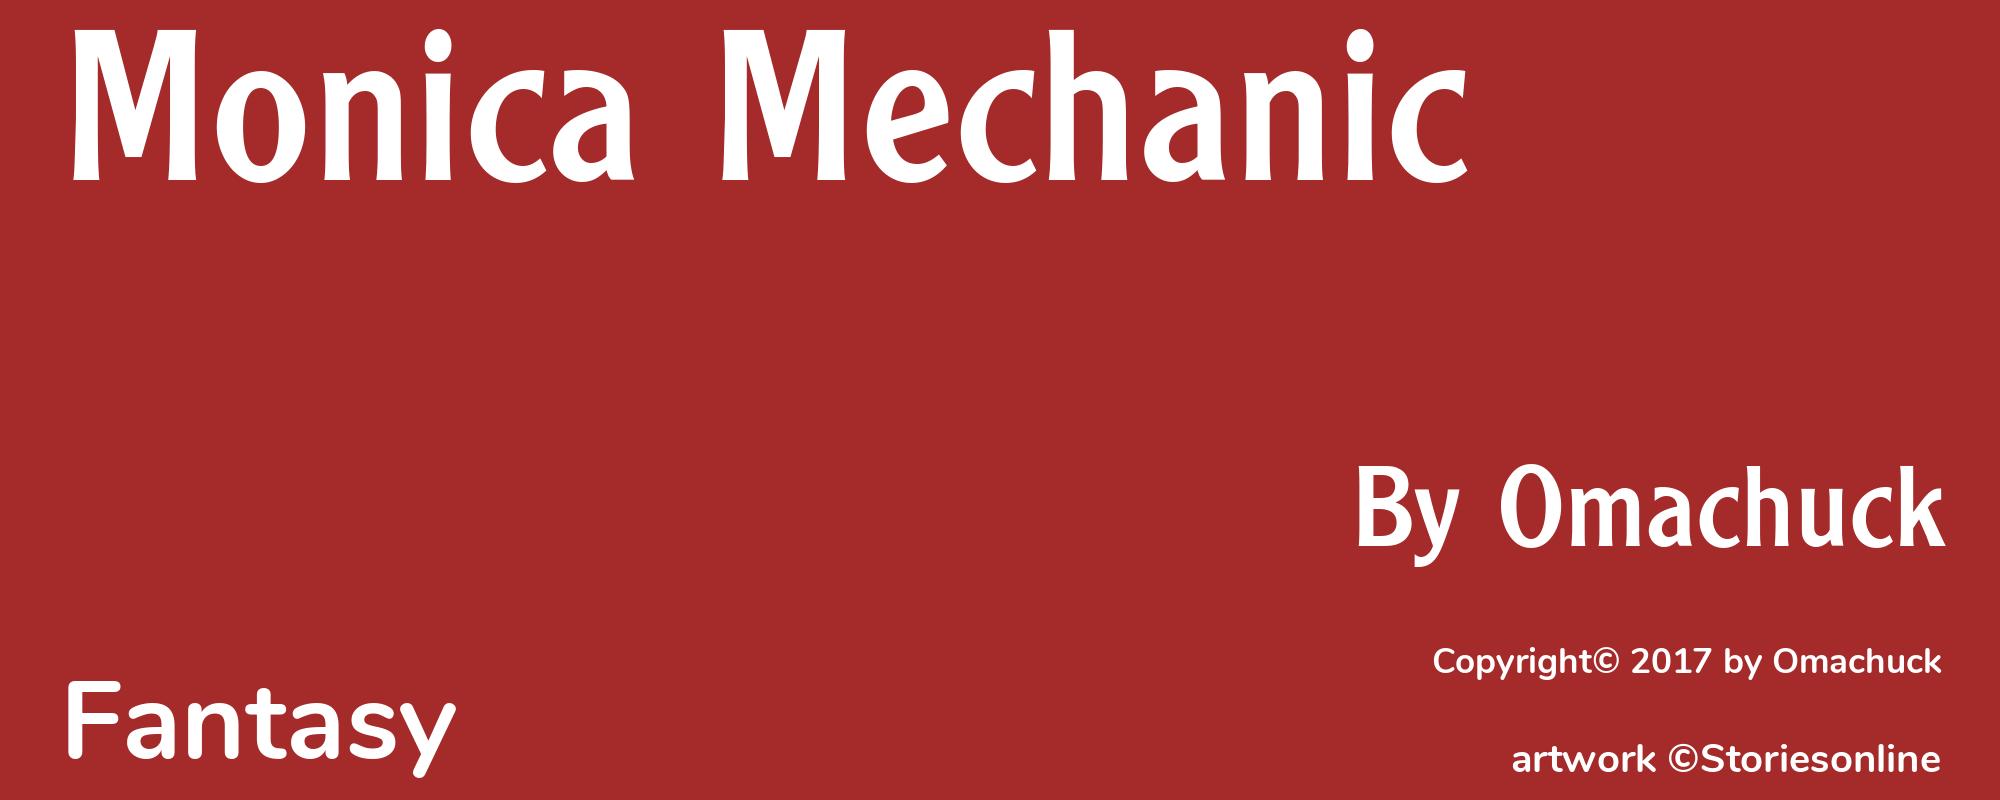 Monica Mechanic - Cover